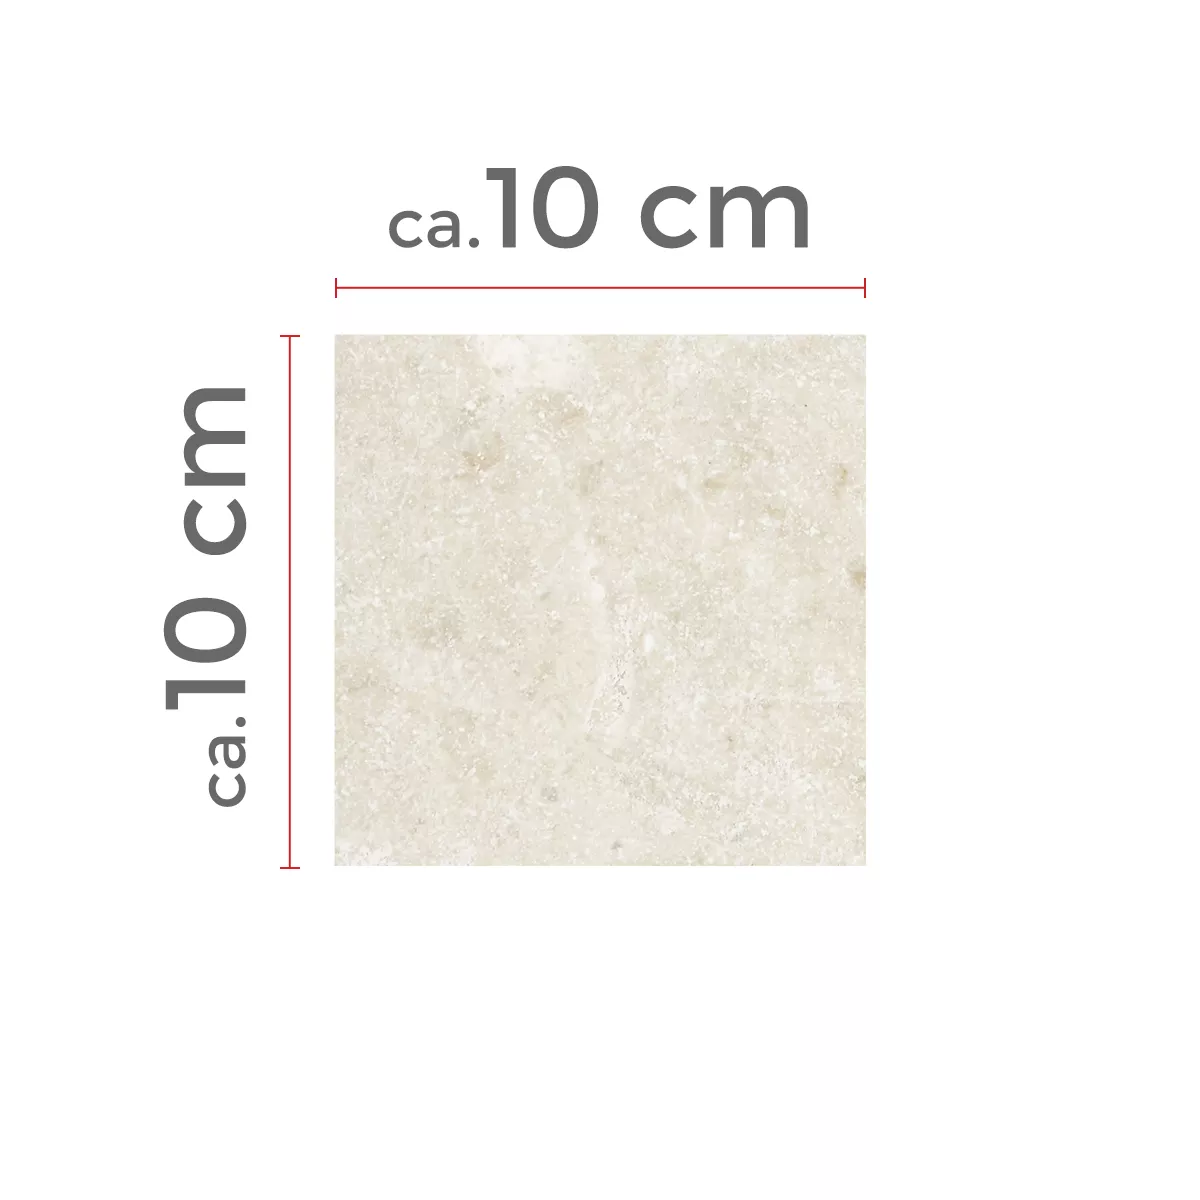 Sample Natural Stone Tiles Marble Afyon Beige 10x10cm